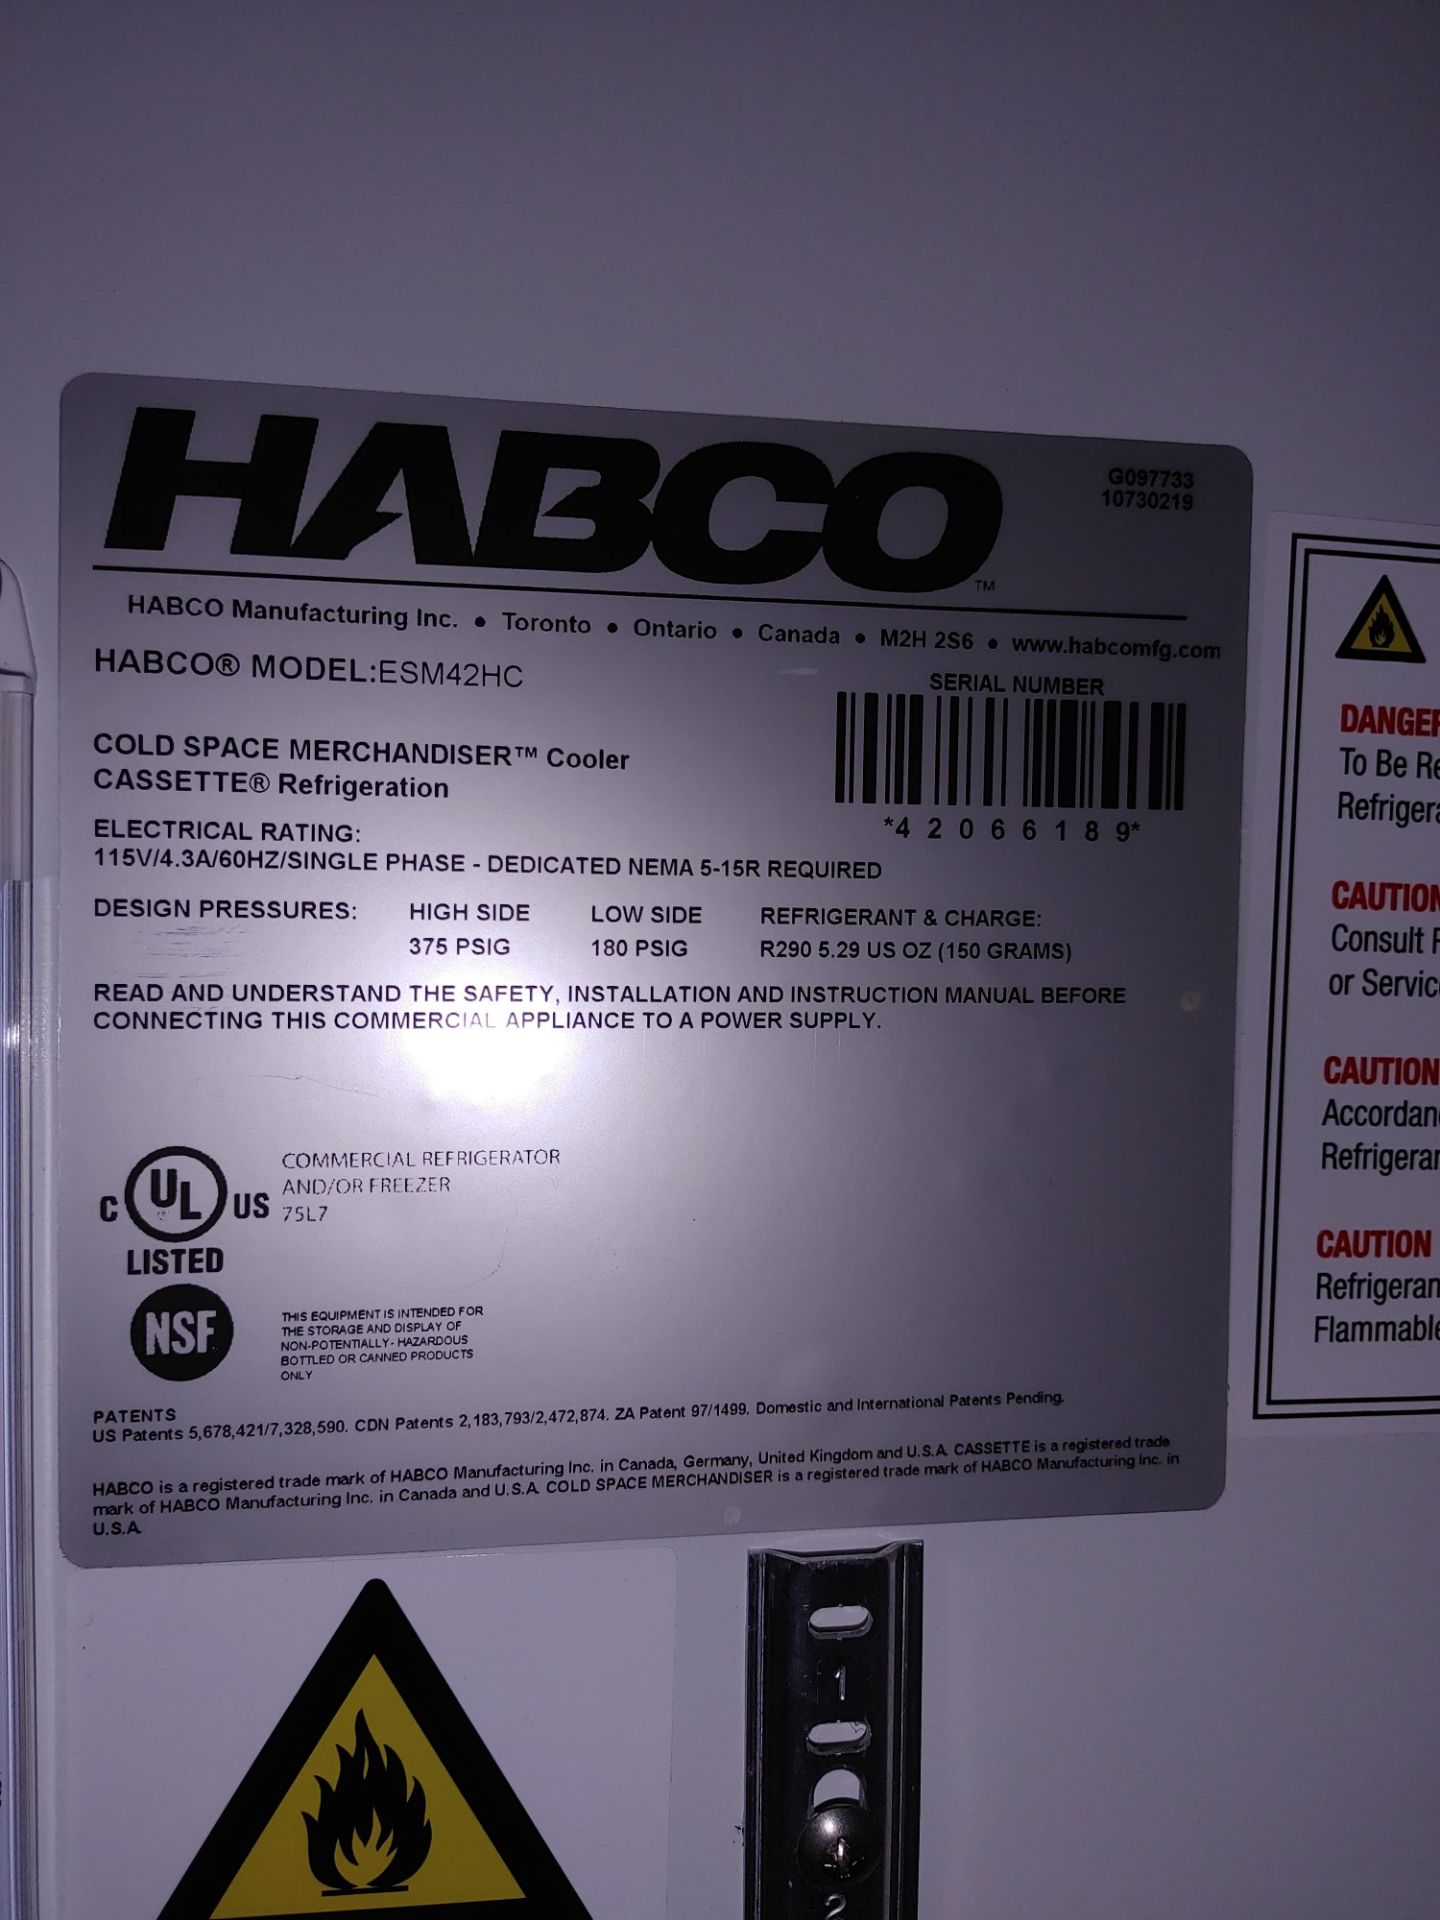 Habco "ESM42HC" 2 Door Glass Front Refrigerator S/N 420662189 - Image 2 of 2